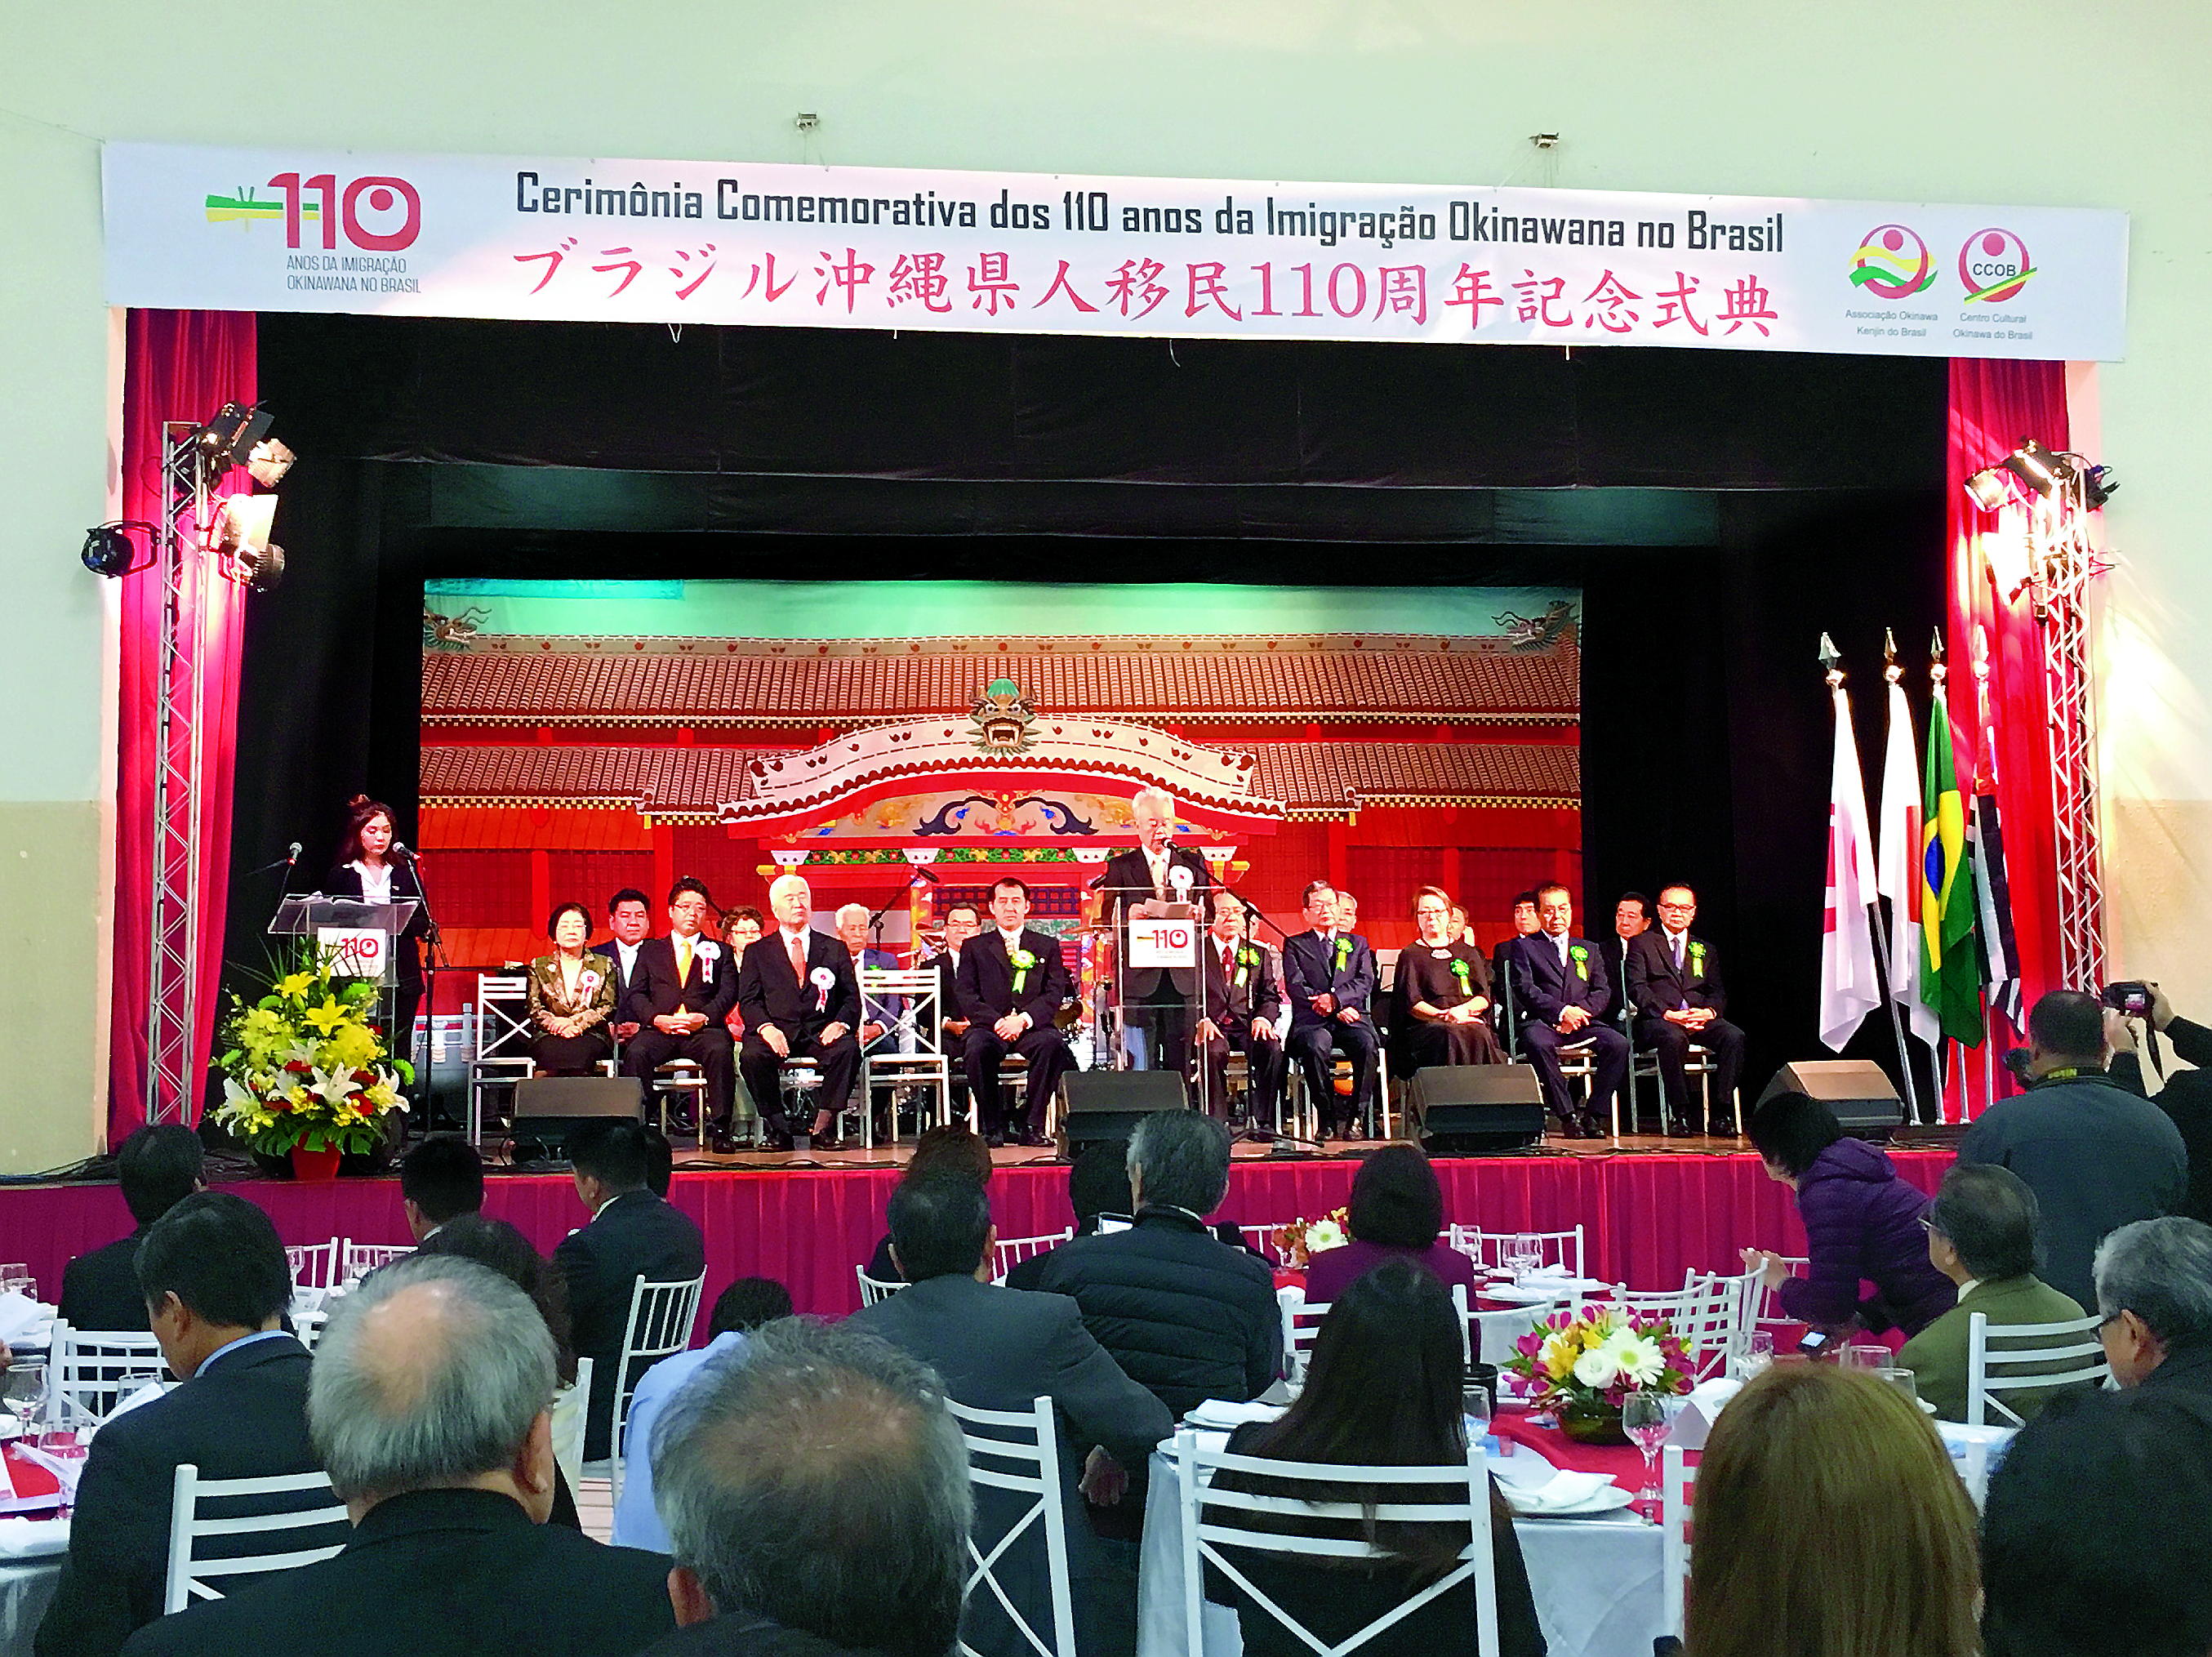 Celebrating 110 years of Okinawa to Brazil immigration